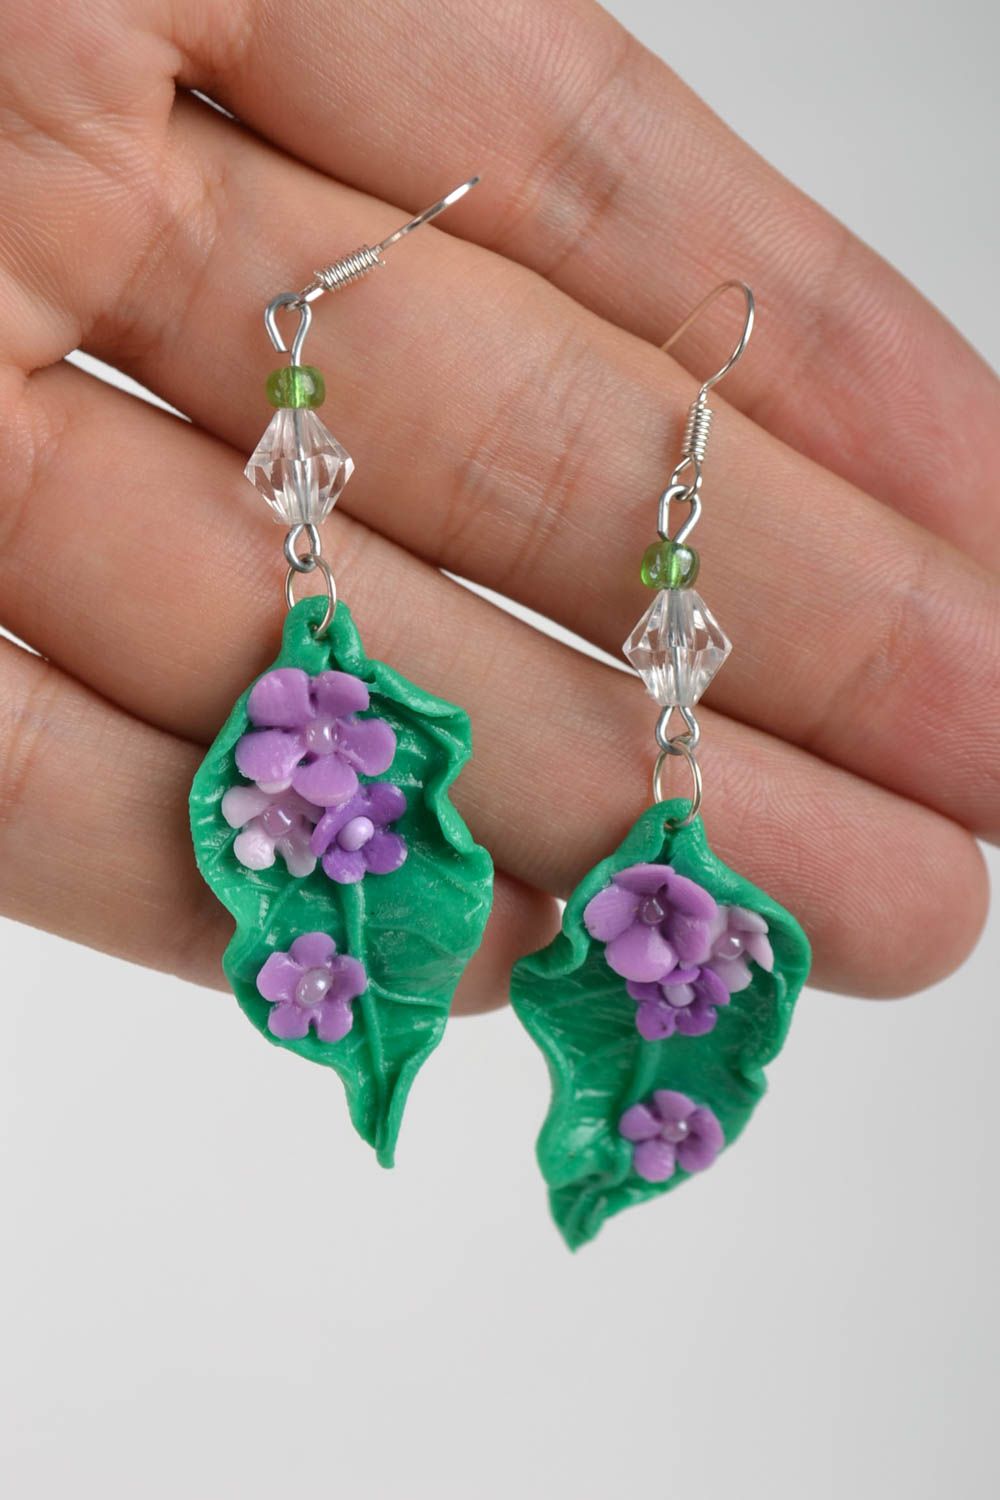 Handmade earrings designer earrings handcrafted jewelry polymer clay gift ideas photo 5